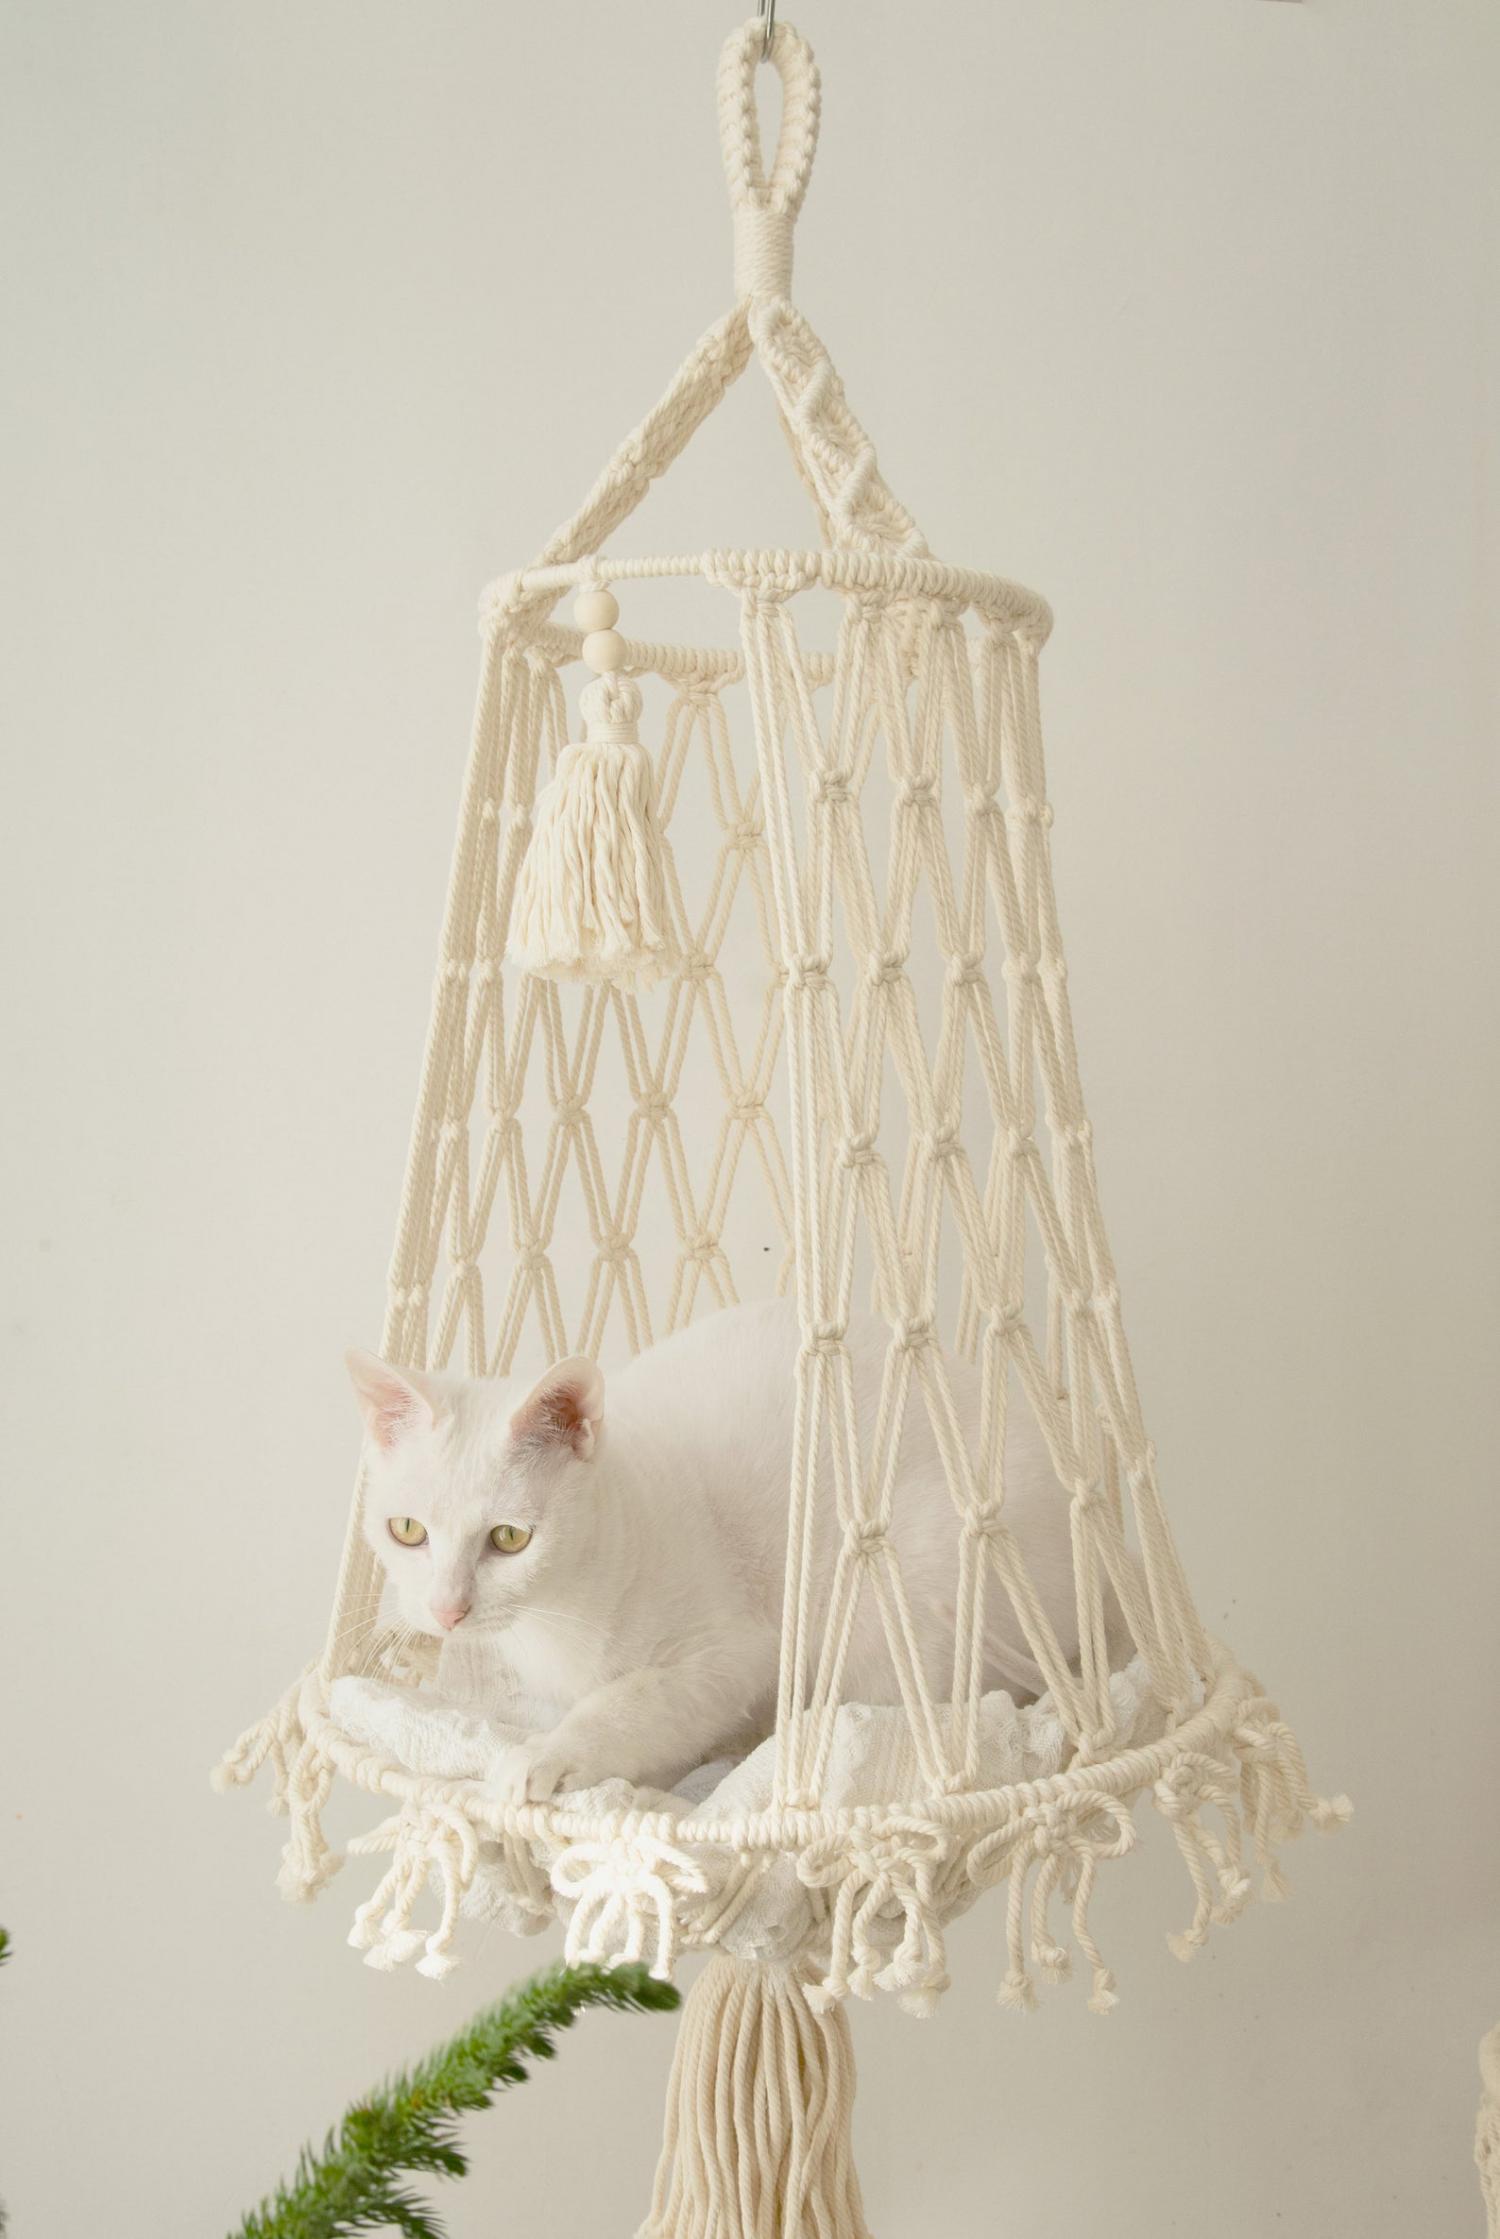 Hanging Cat Hammock - Swinging Macrame cat bed